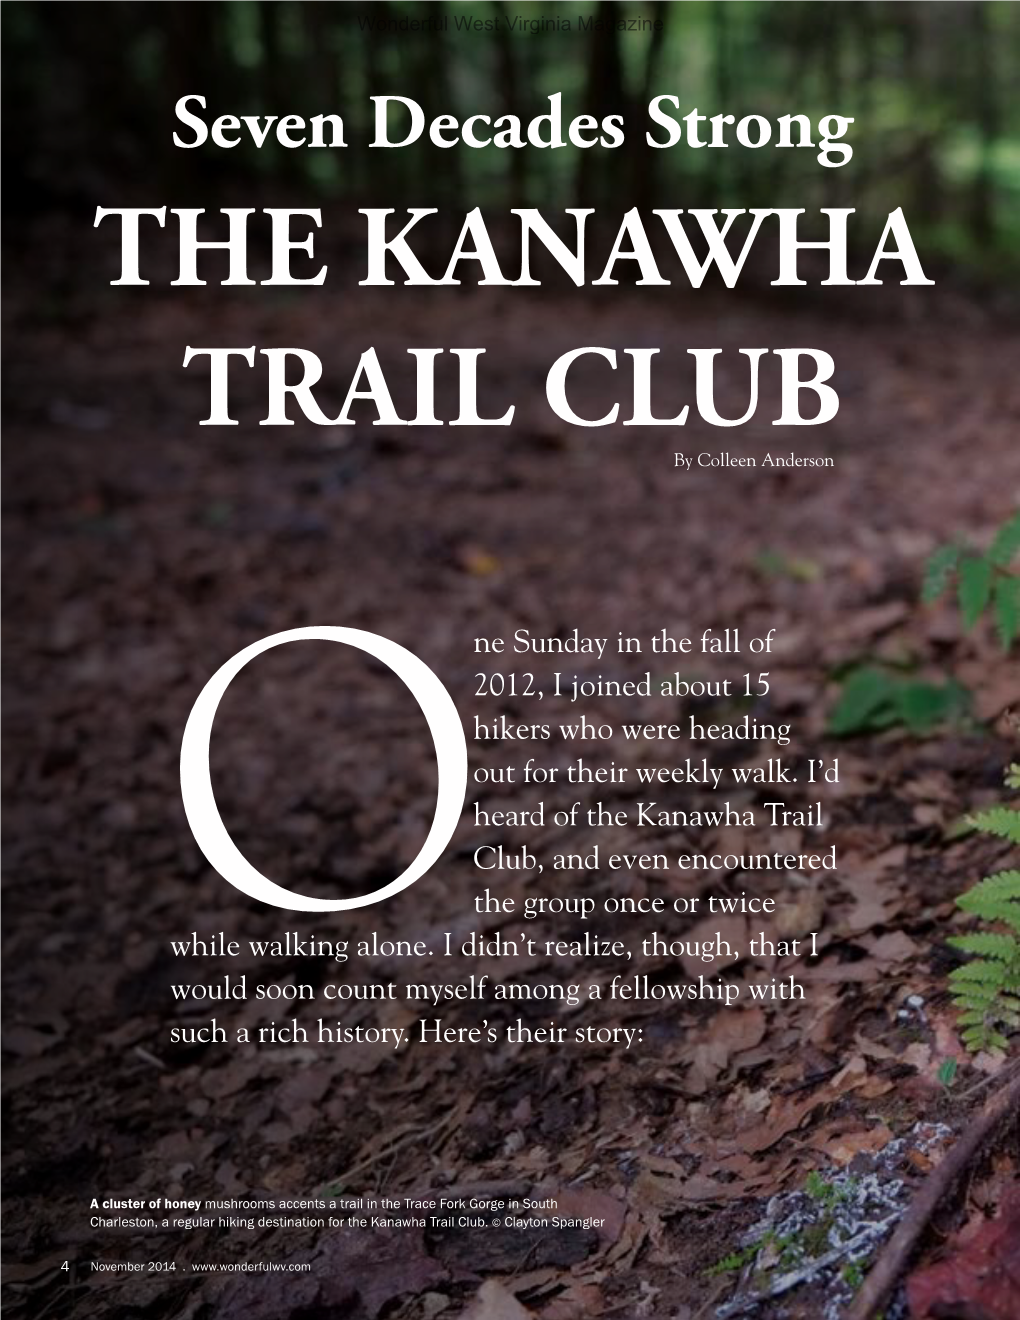 The Kanawha Trail Club: Seven Decades Strong